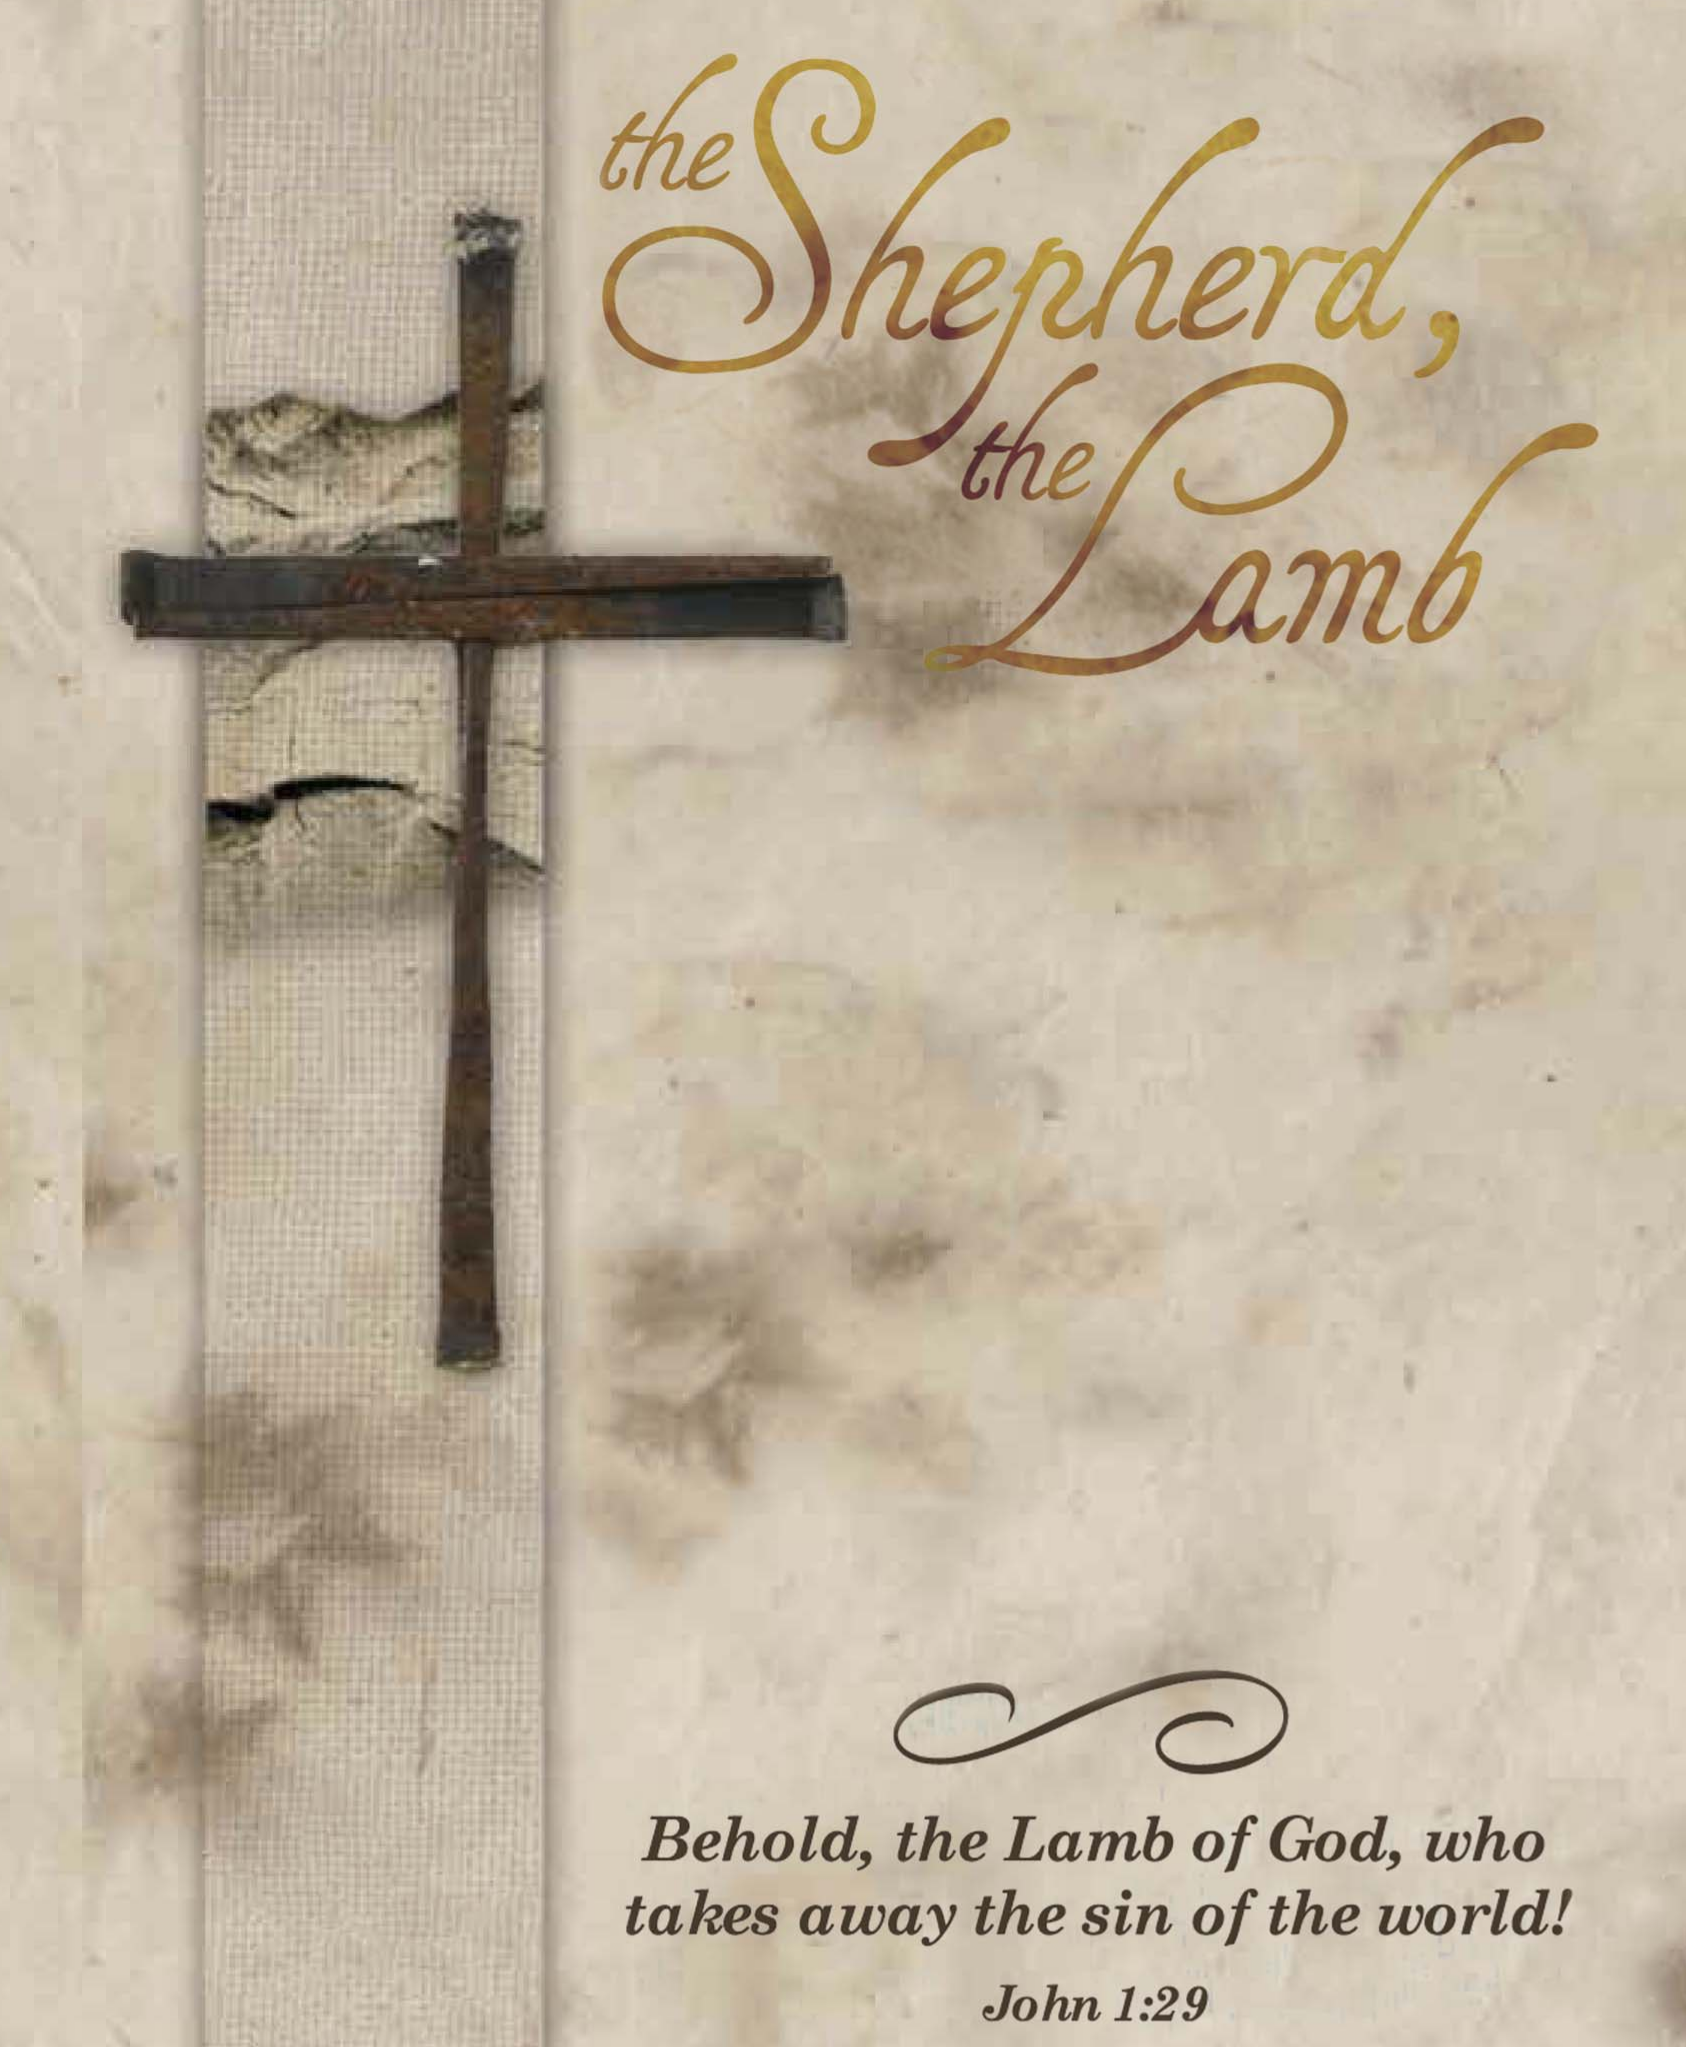 The Shepherd, The Lamb